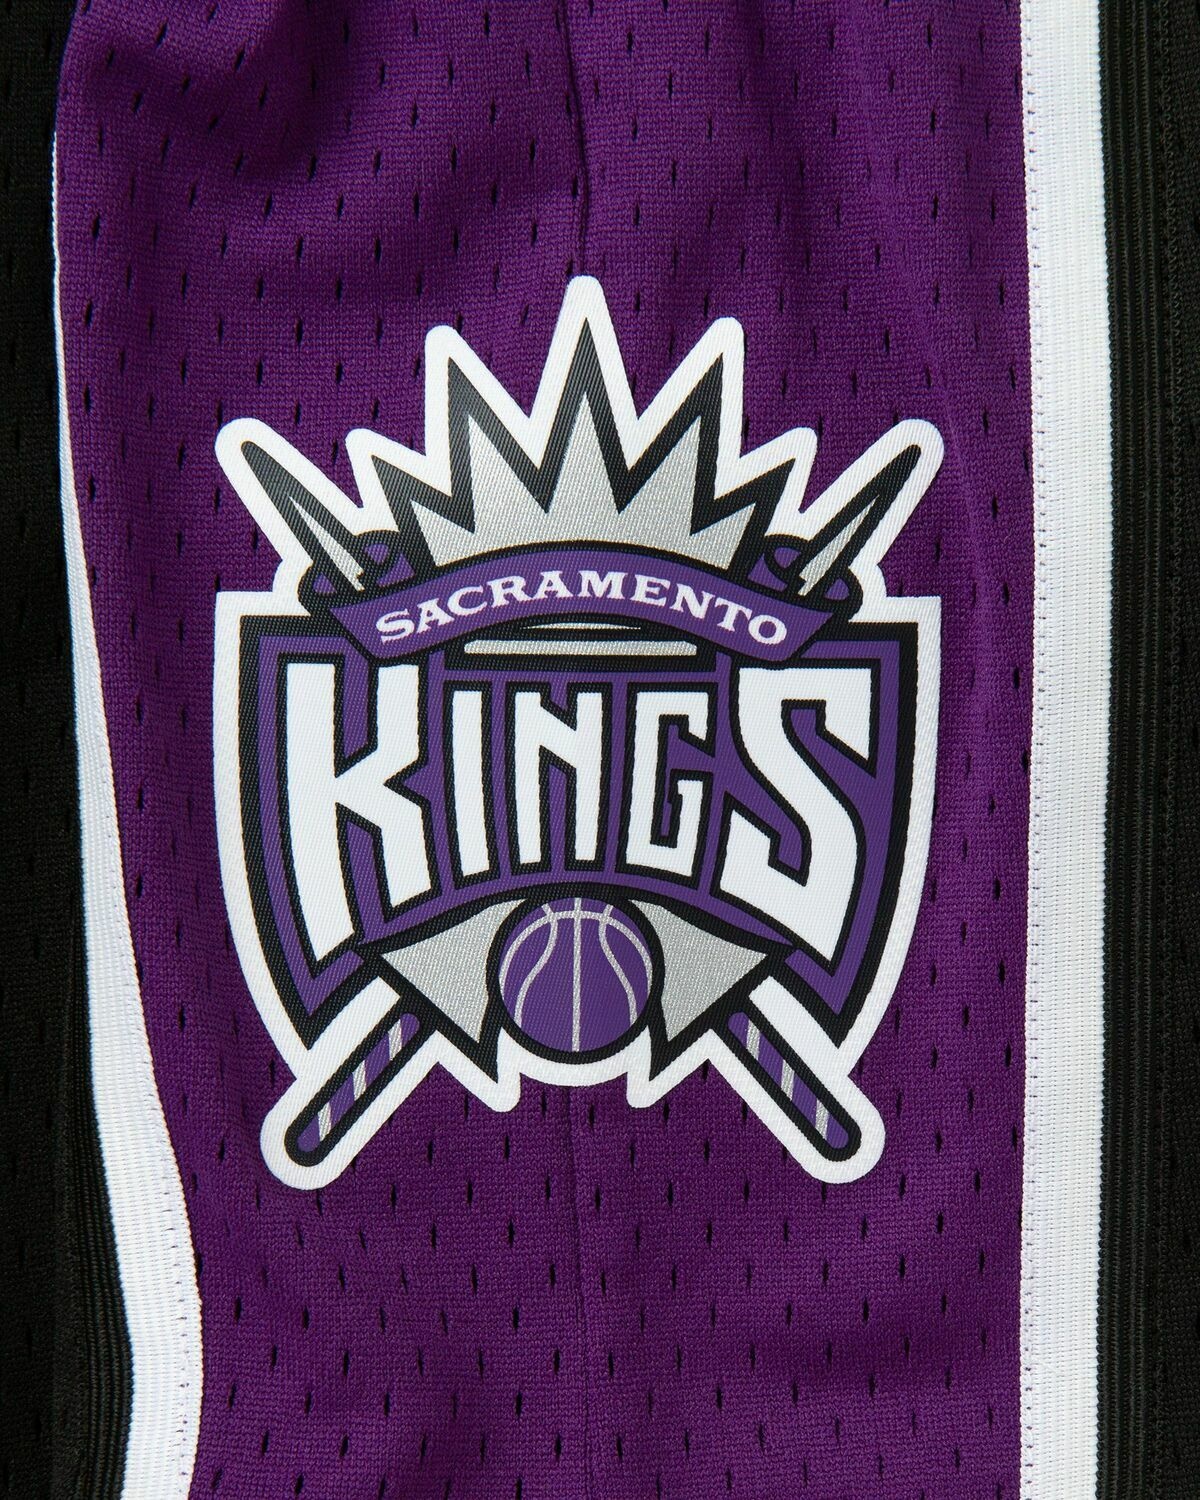 Mitchell & Ness Nba Swingman Shorts Sacramento Kings Road 2000 01 Black/Purple - Mens - Sport & Team Shorts